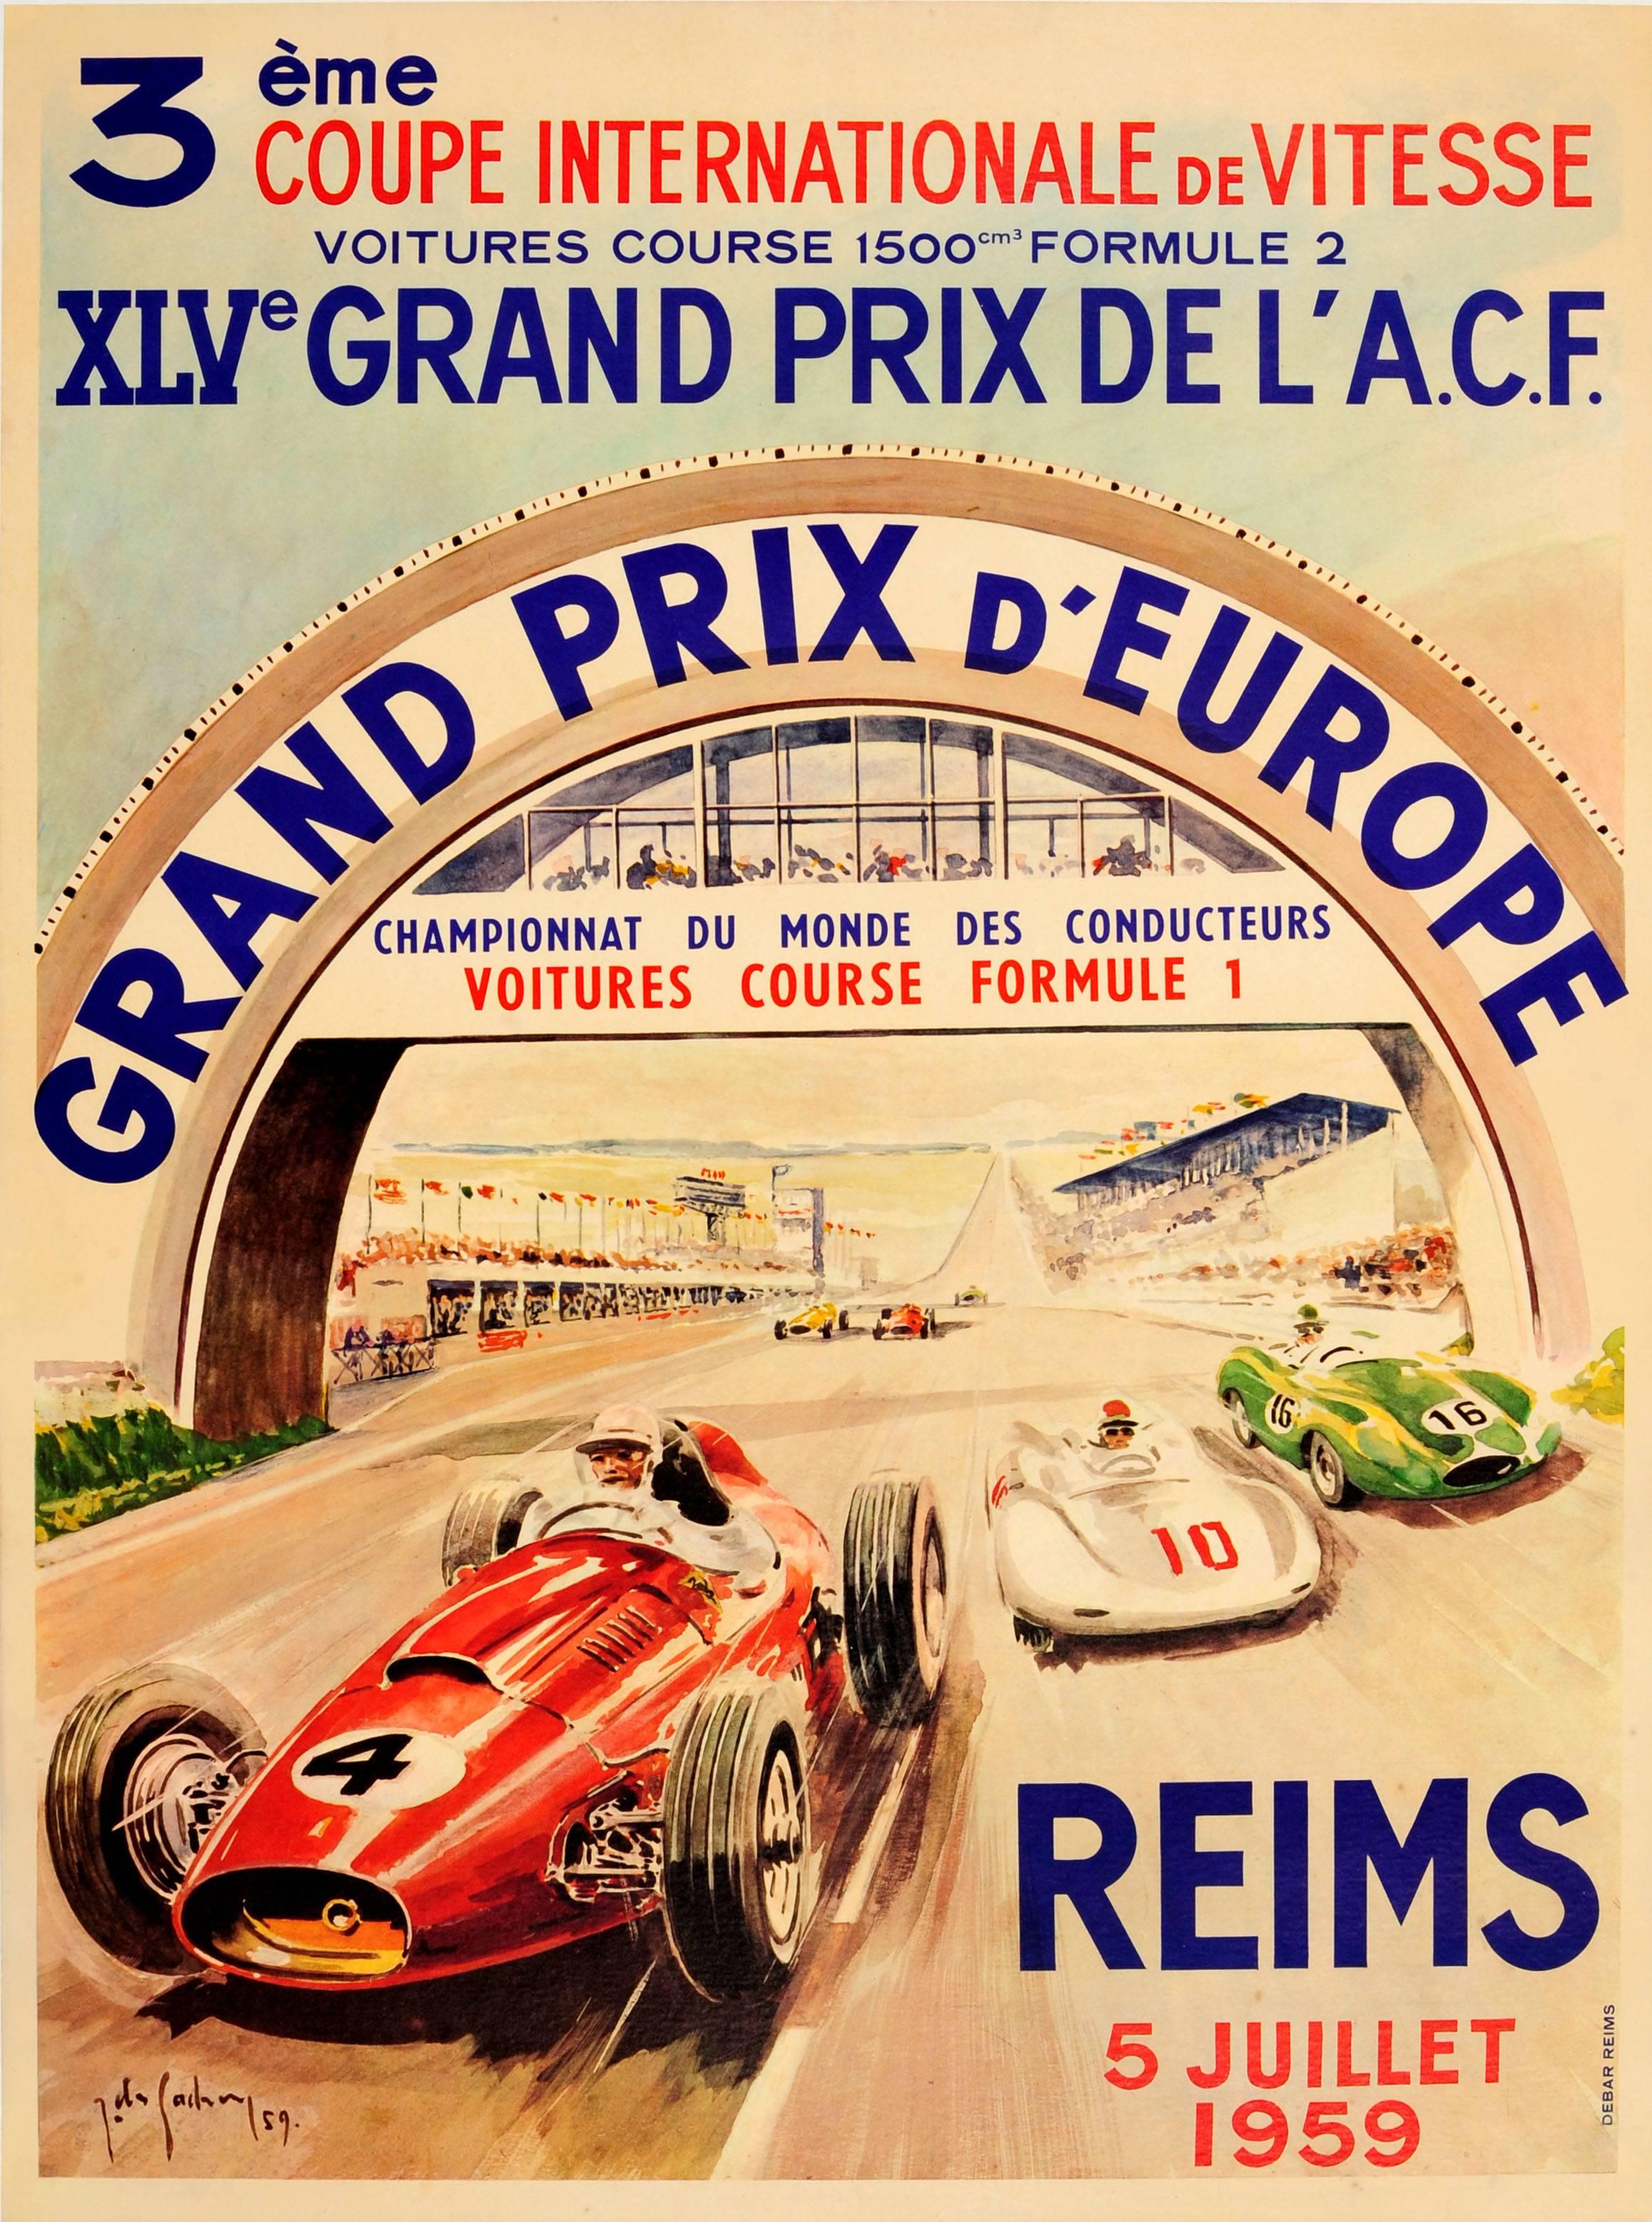 Jean Des Gachons Print - Original Formula One Motor Racing Poster For The Grand Prix d'Europe Reims 1959